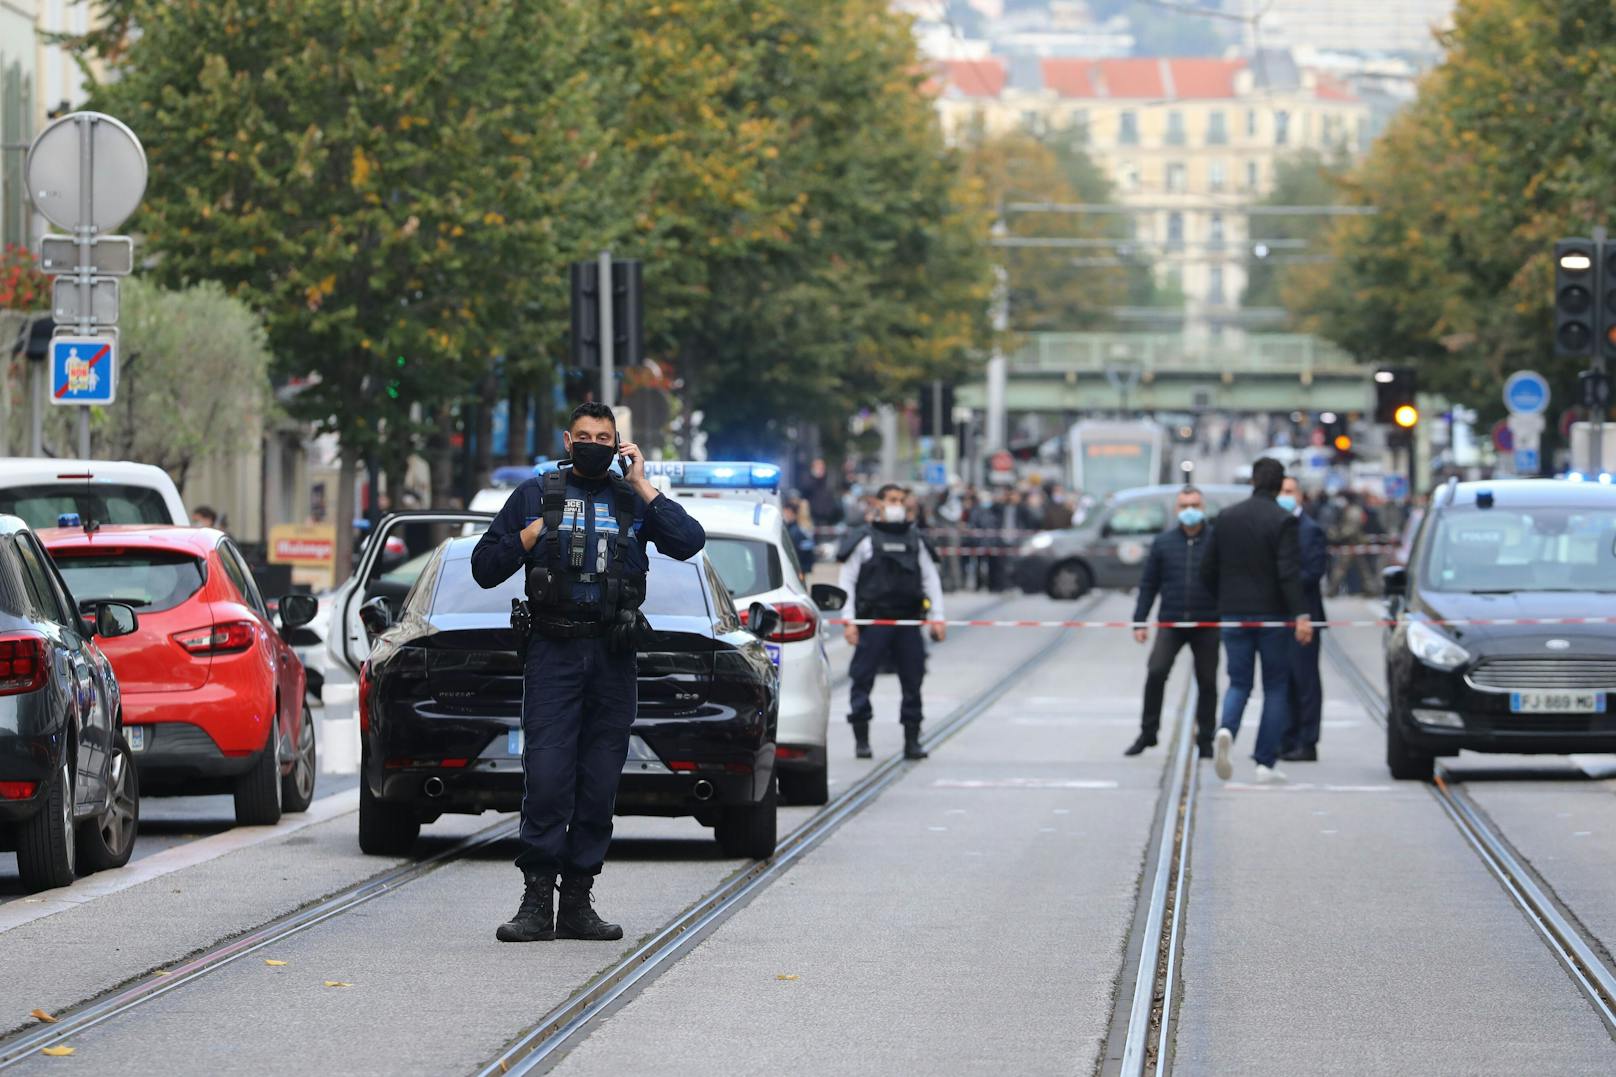 Messer-Attacke in Nizza – 3 Tote, mehrere Verletzte